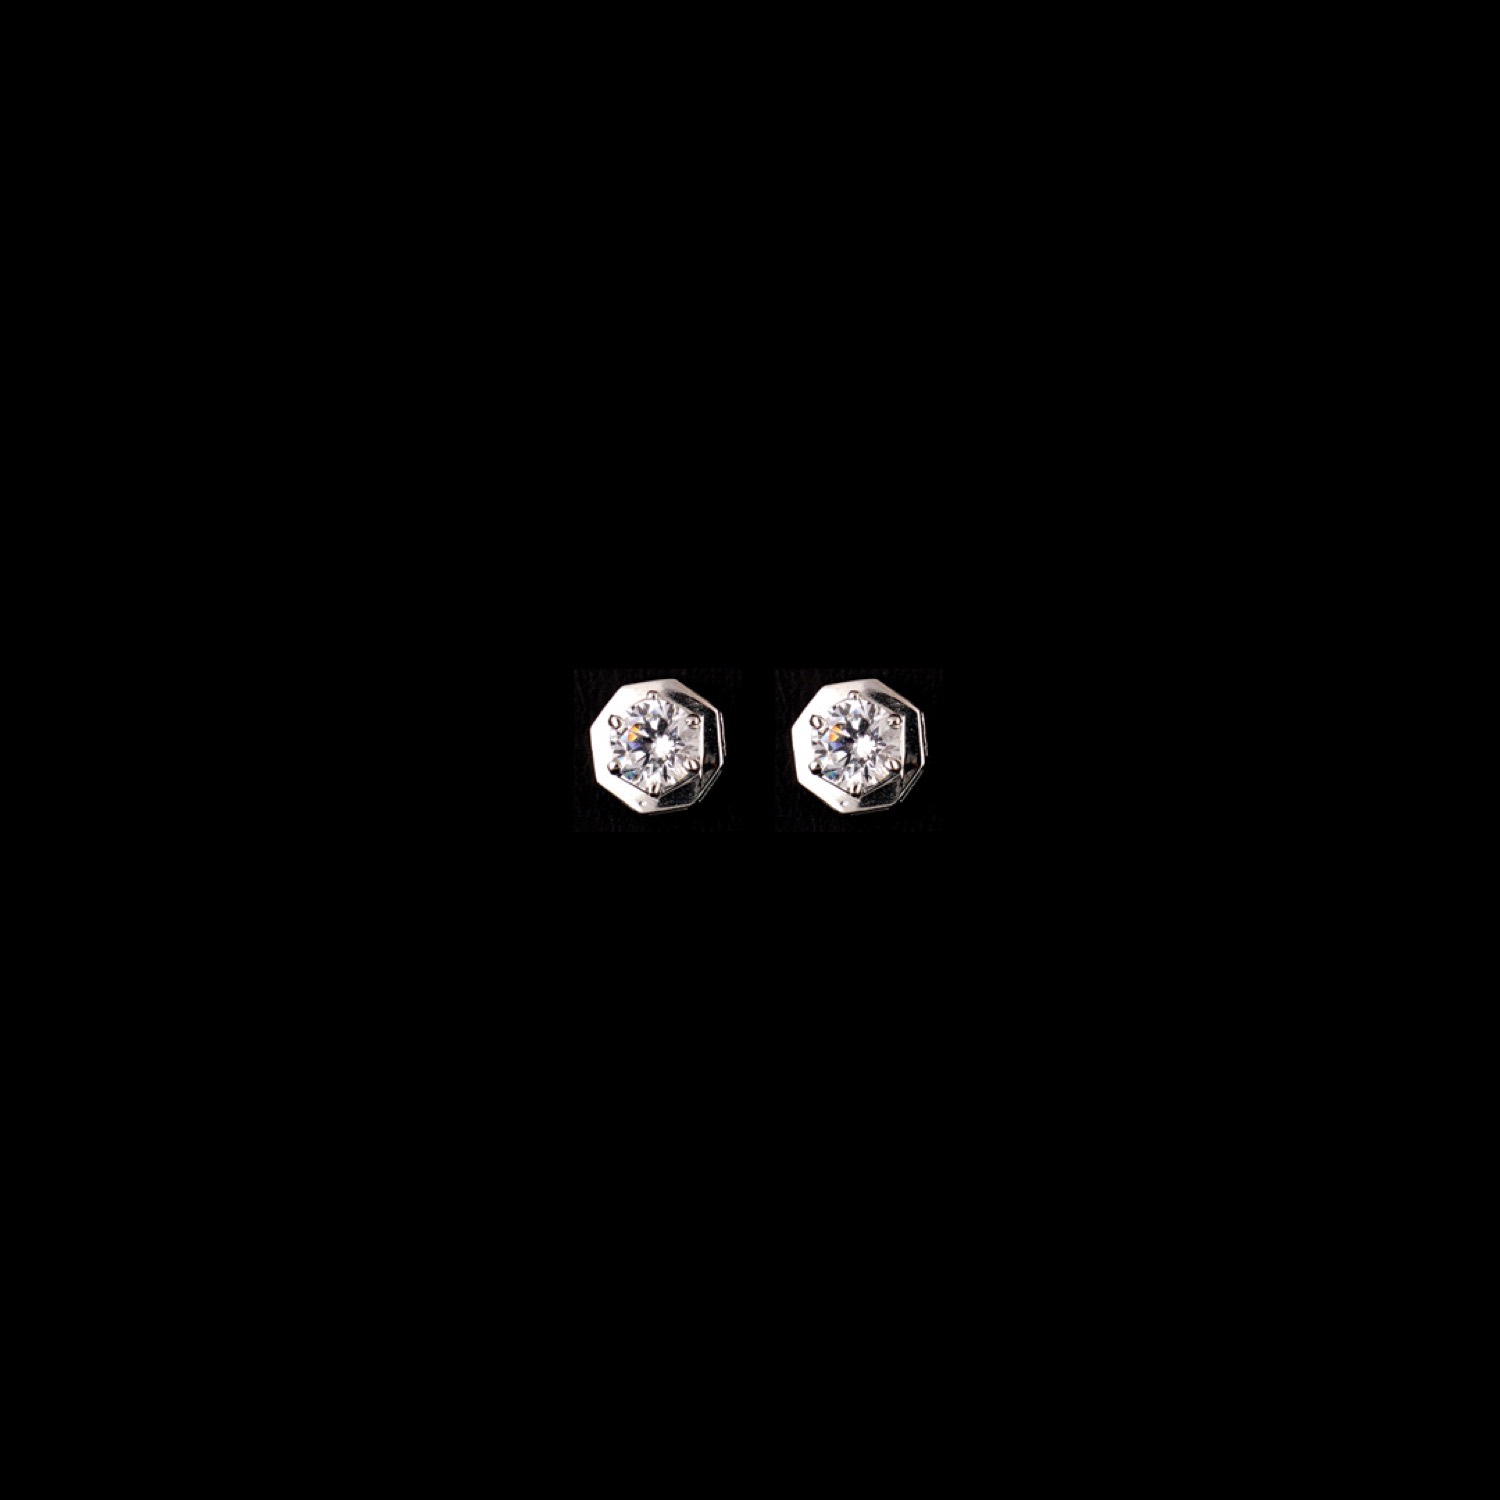 varam_earrings_102022_square_octagon_shaped_white_stone_silver_earrings-1